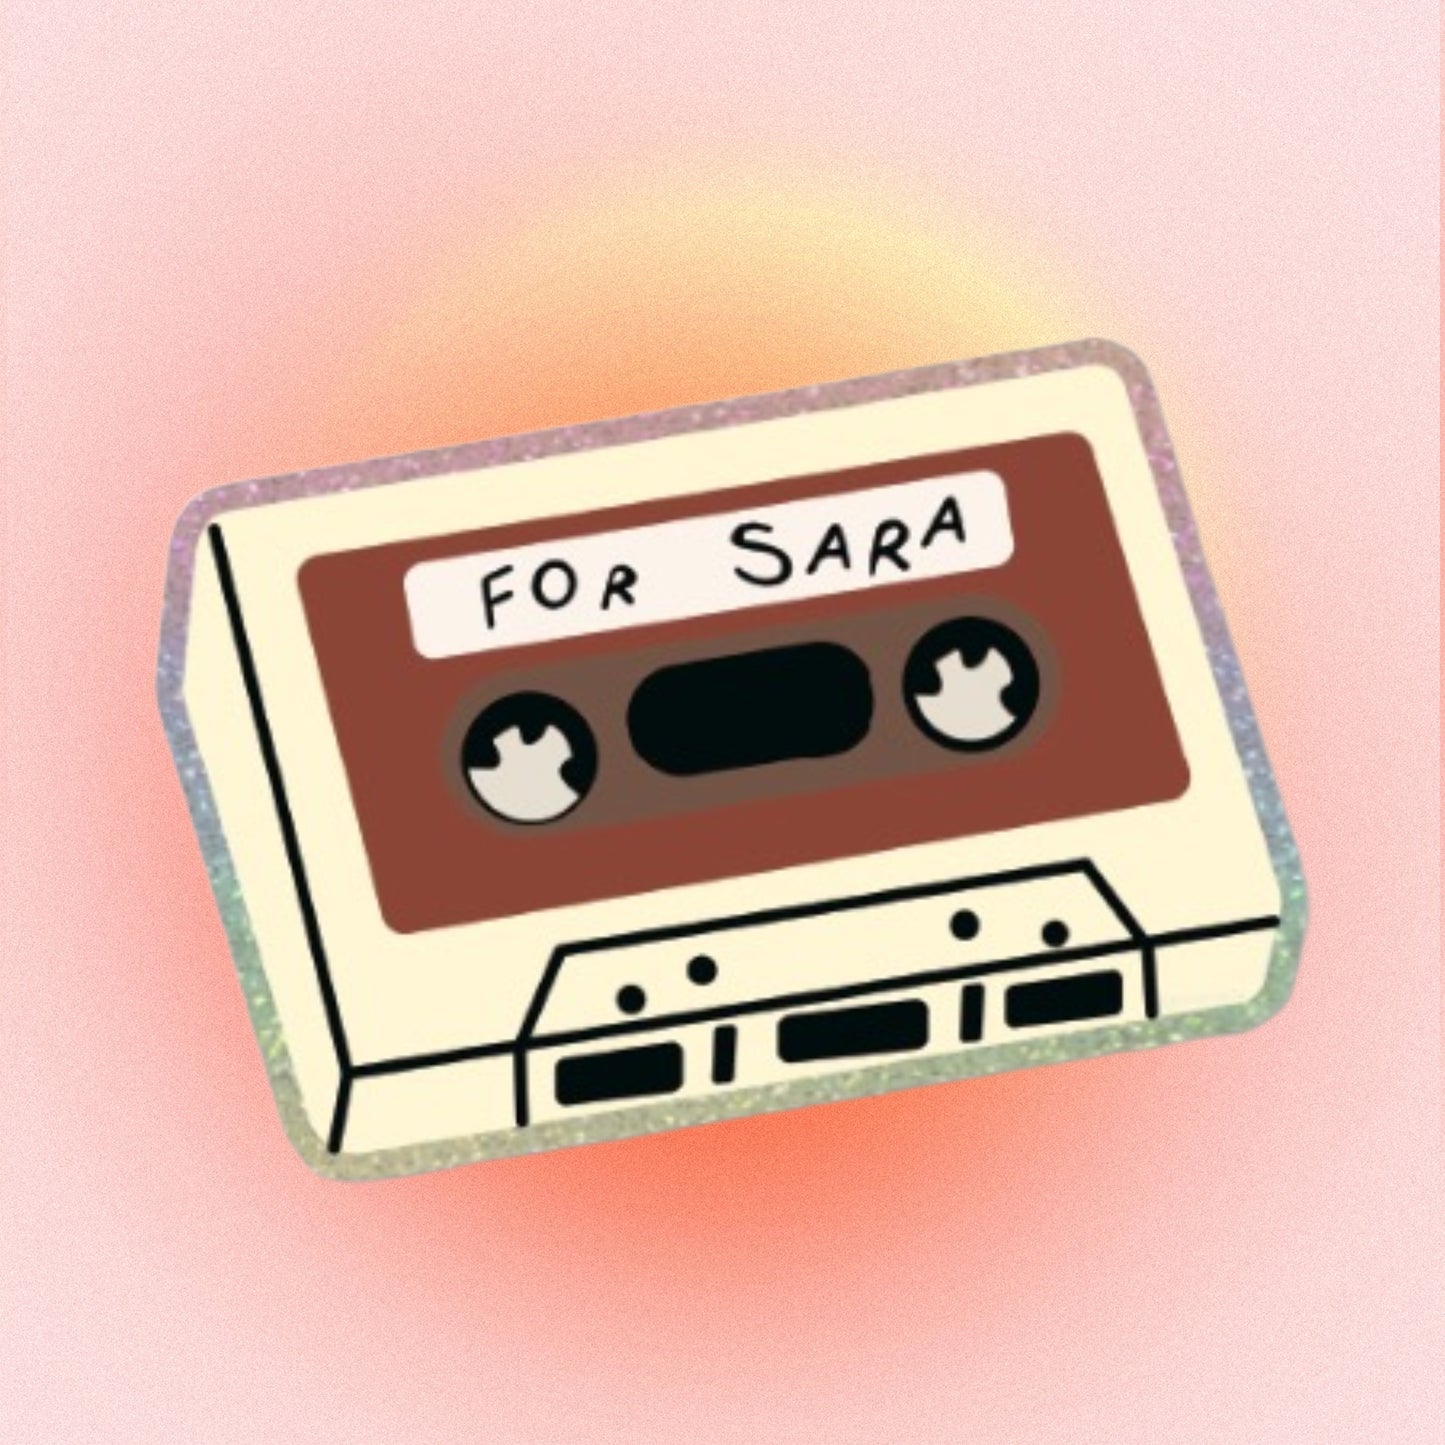 For Sara Tape *sticker*